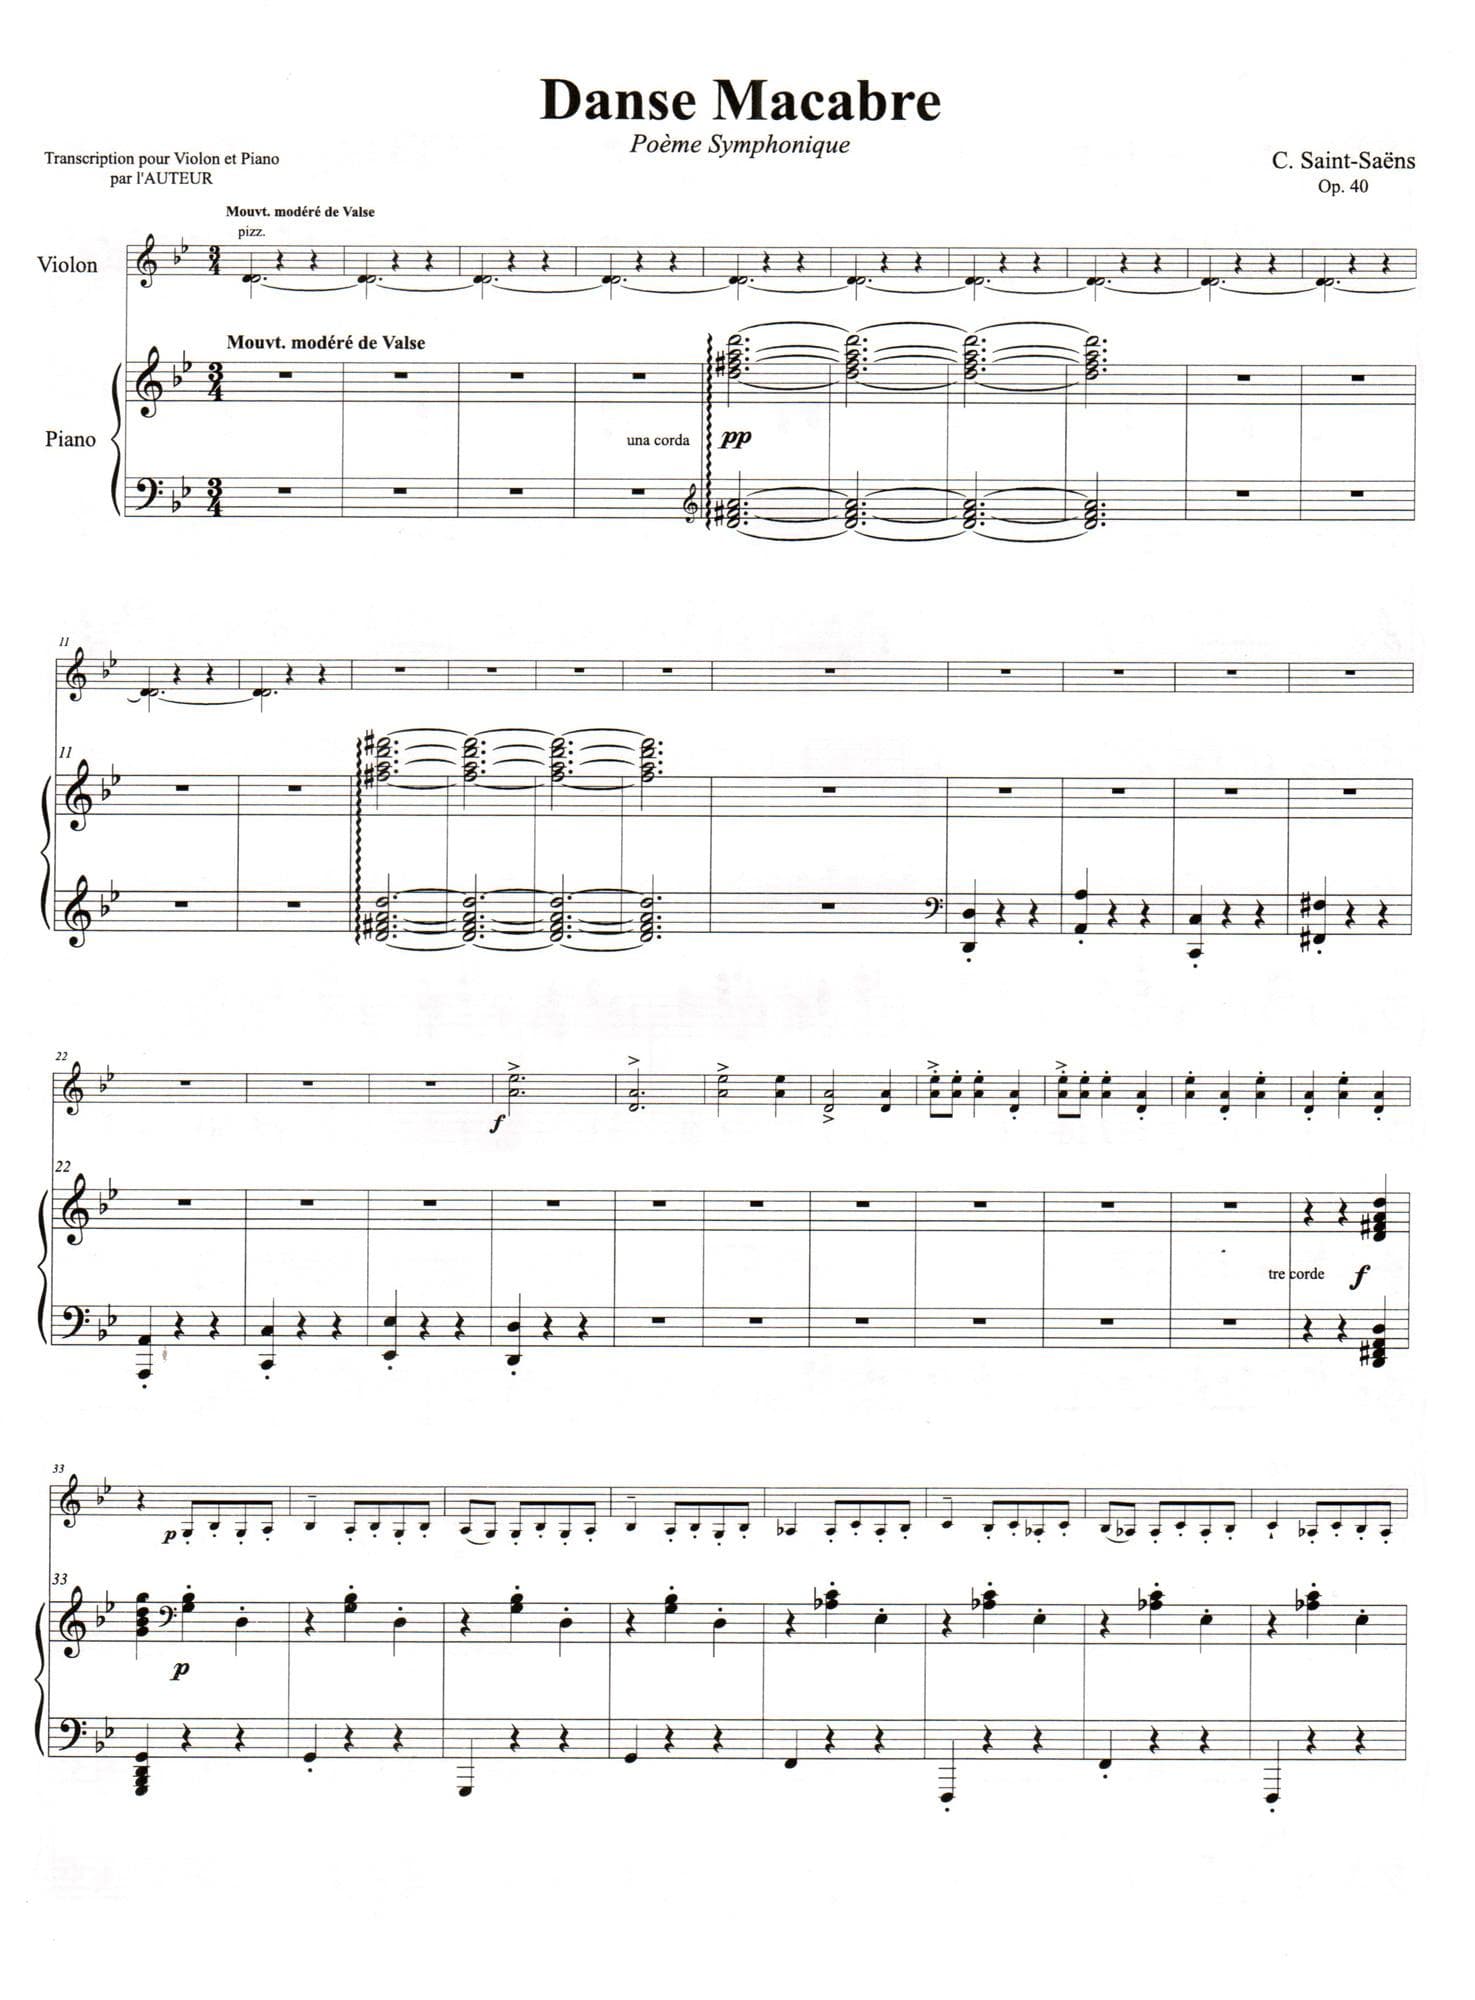 Saint-Saens, Camille - Danse Macabre, Op 40 - Violin and Piano - Kalmus Edition